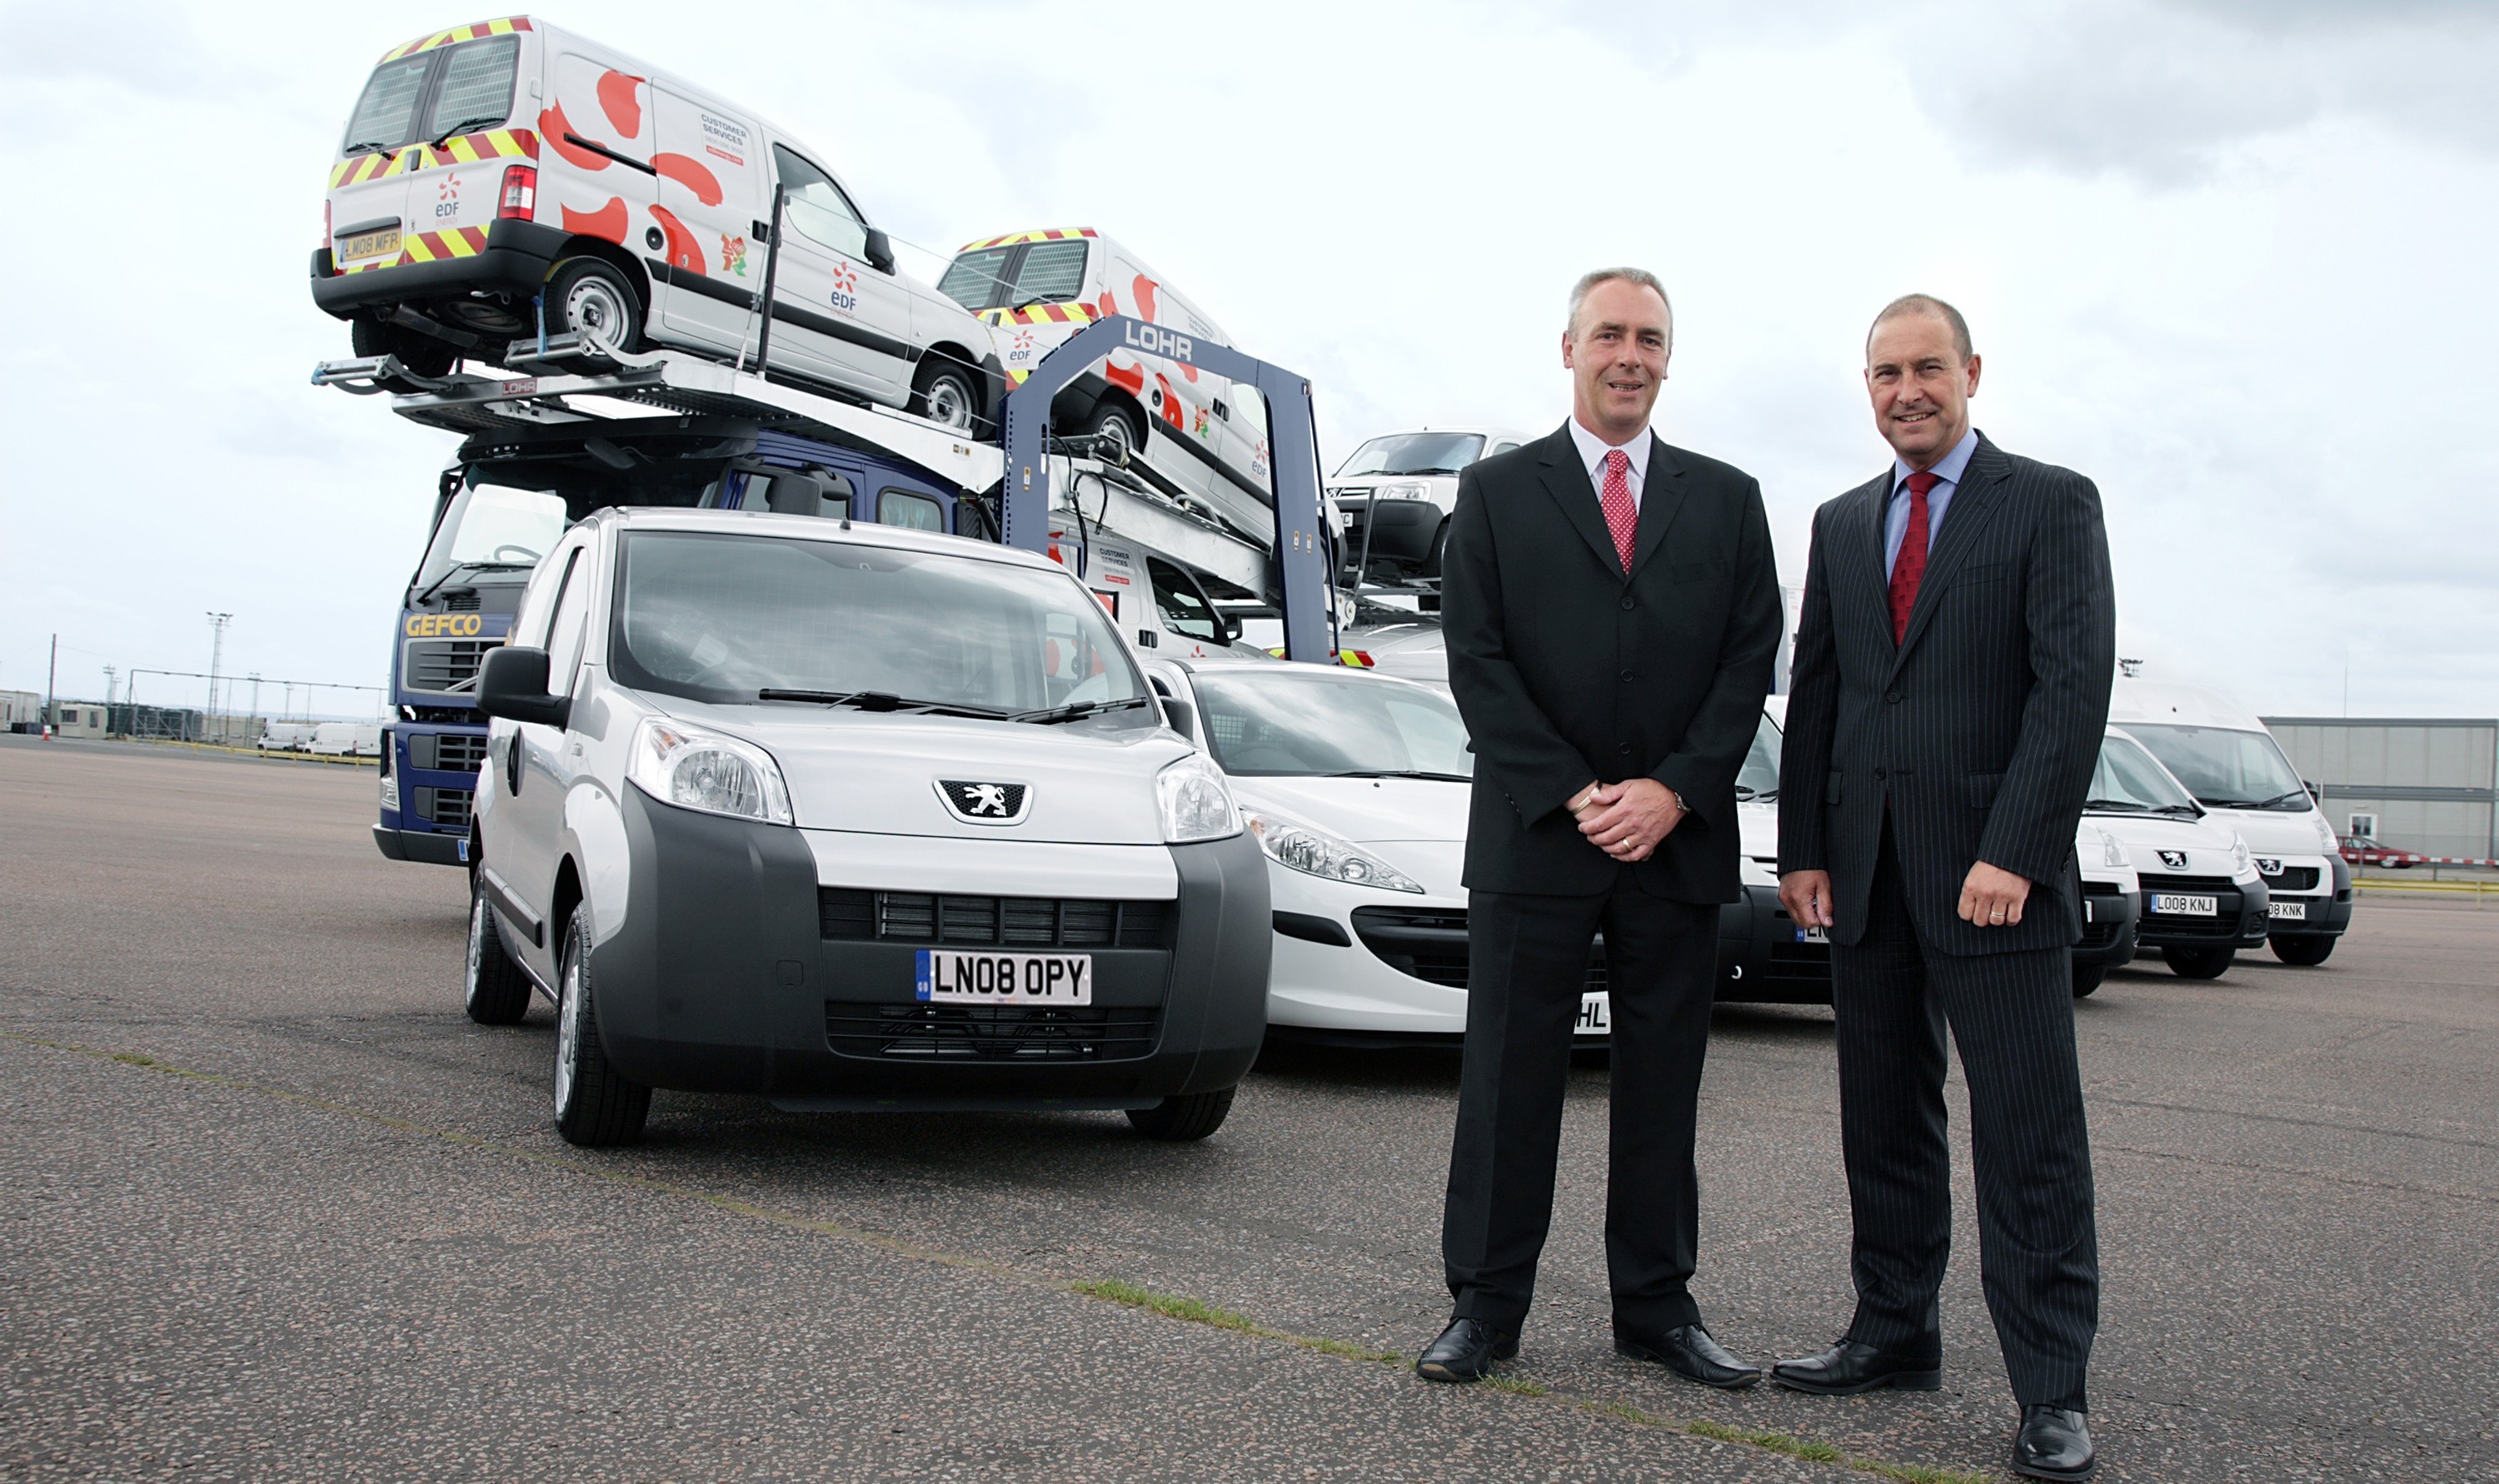 Peugeot Partner Vans